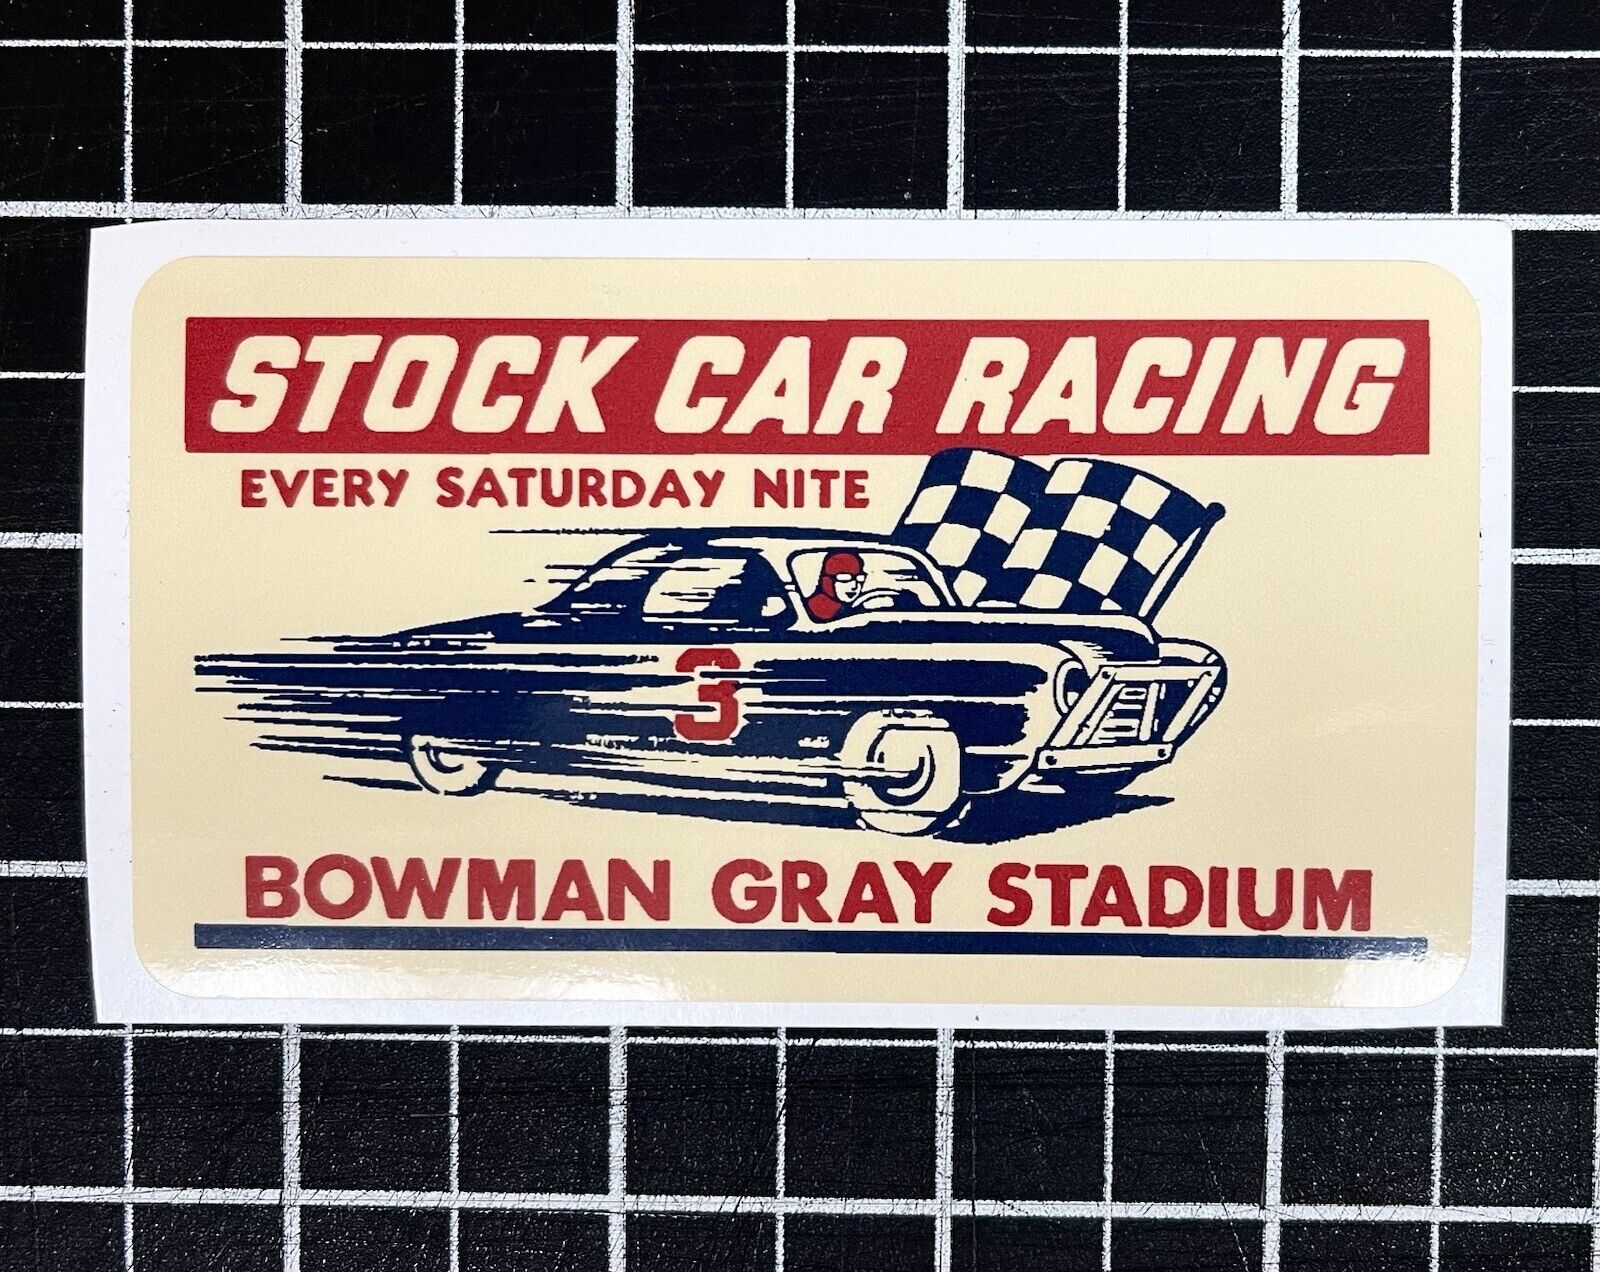 NEW 1949 BOWMAN GRAY STADIUM NASCAR STOCK CAR RACING DECAL STICKER VINTAGE